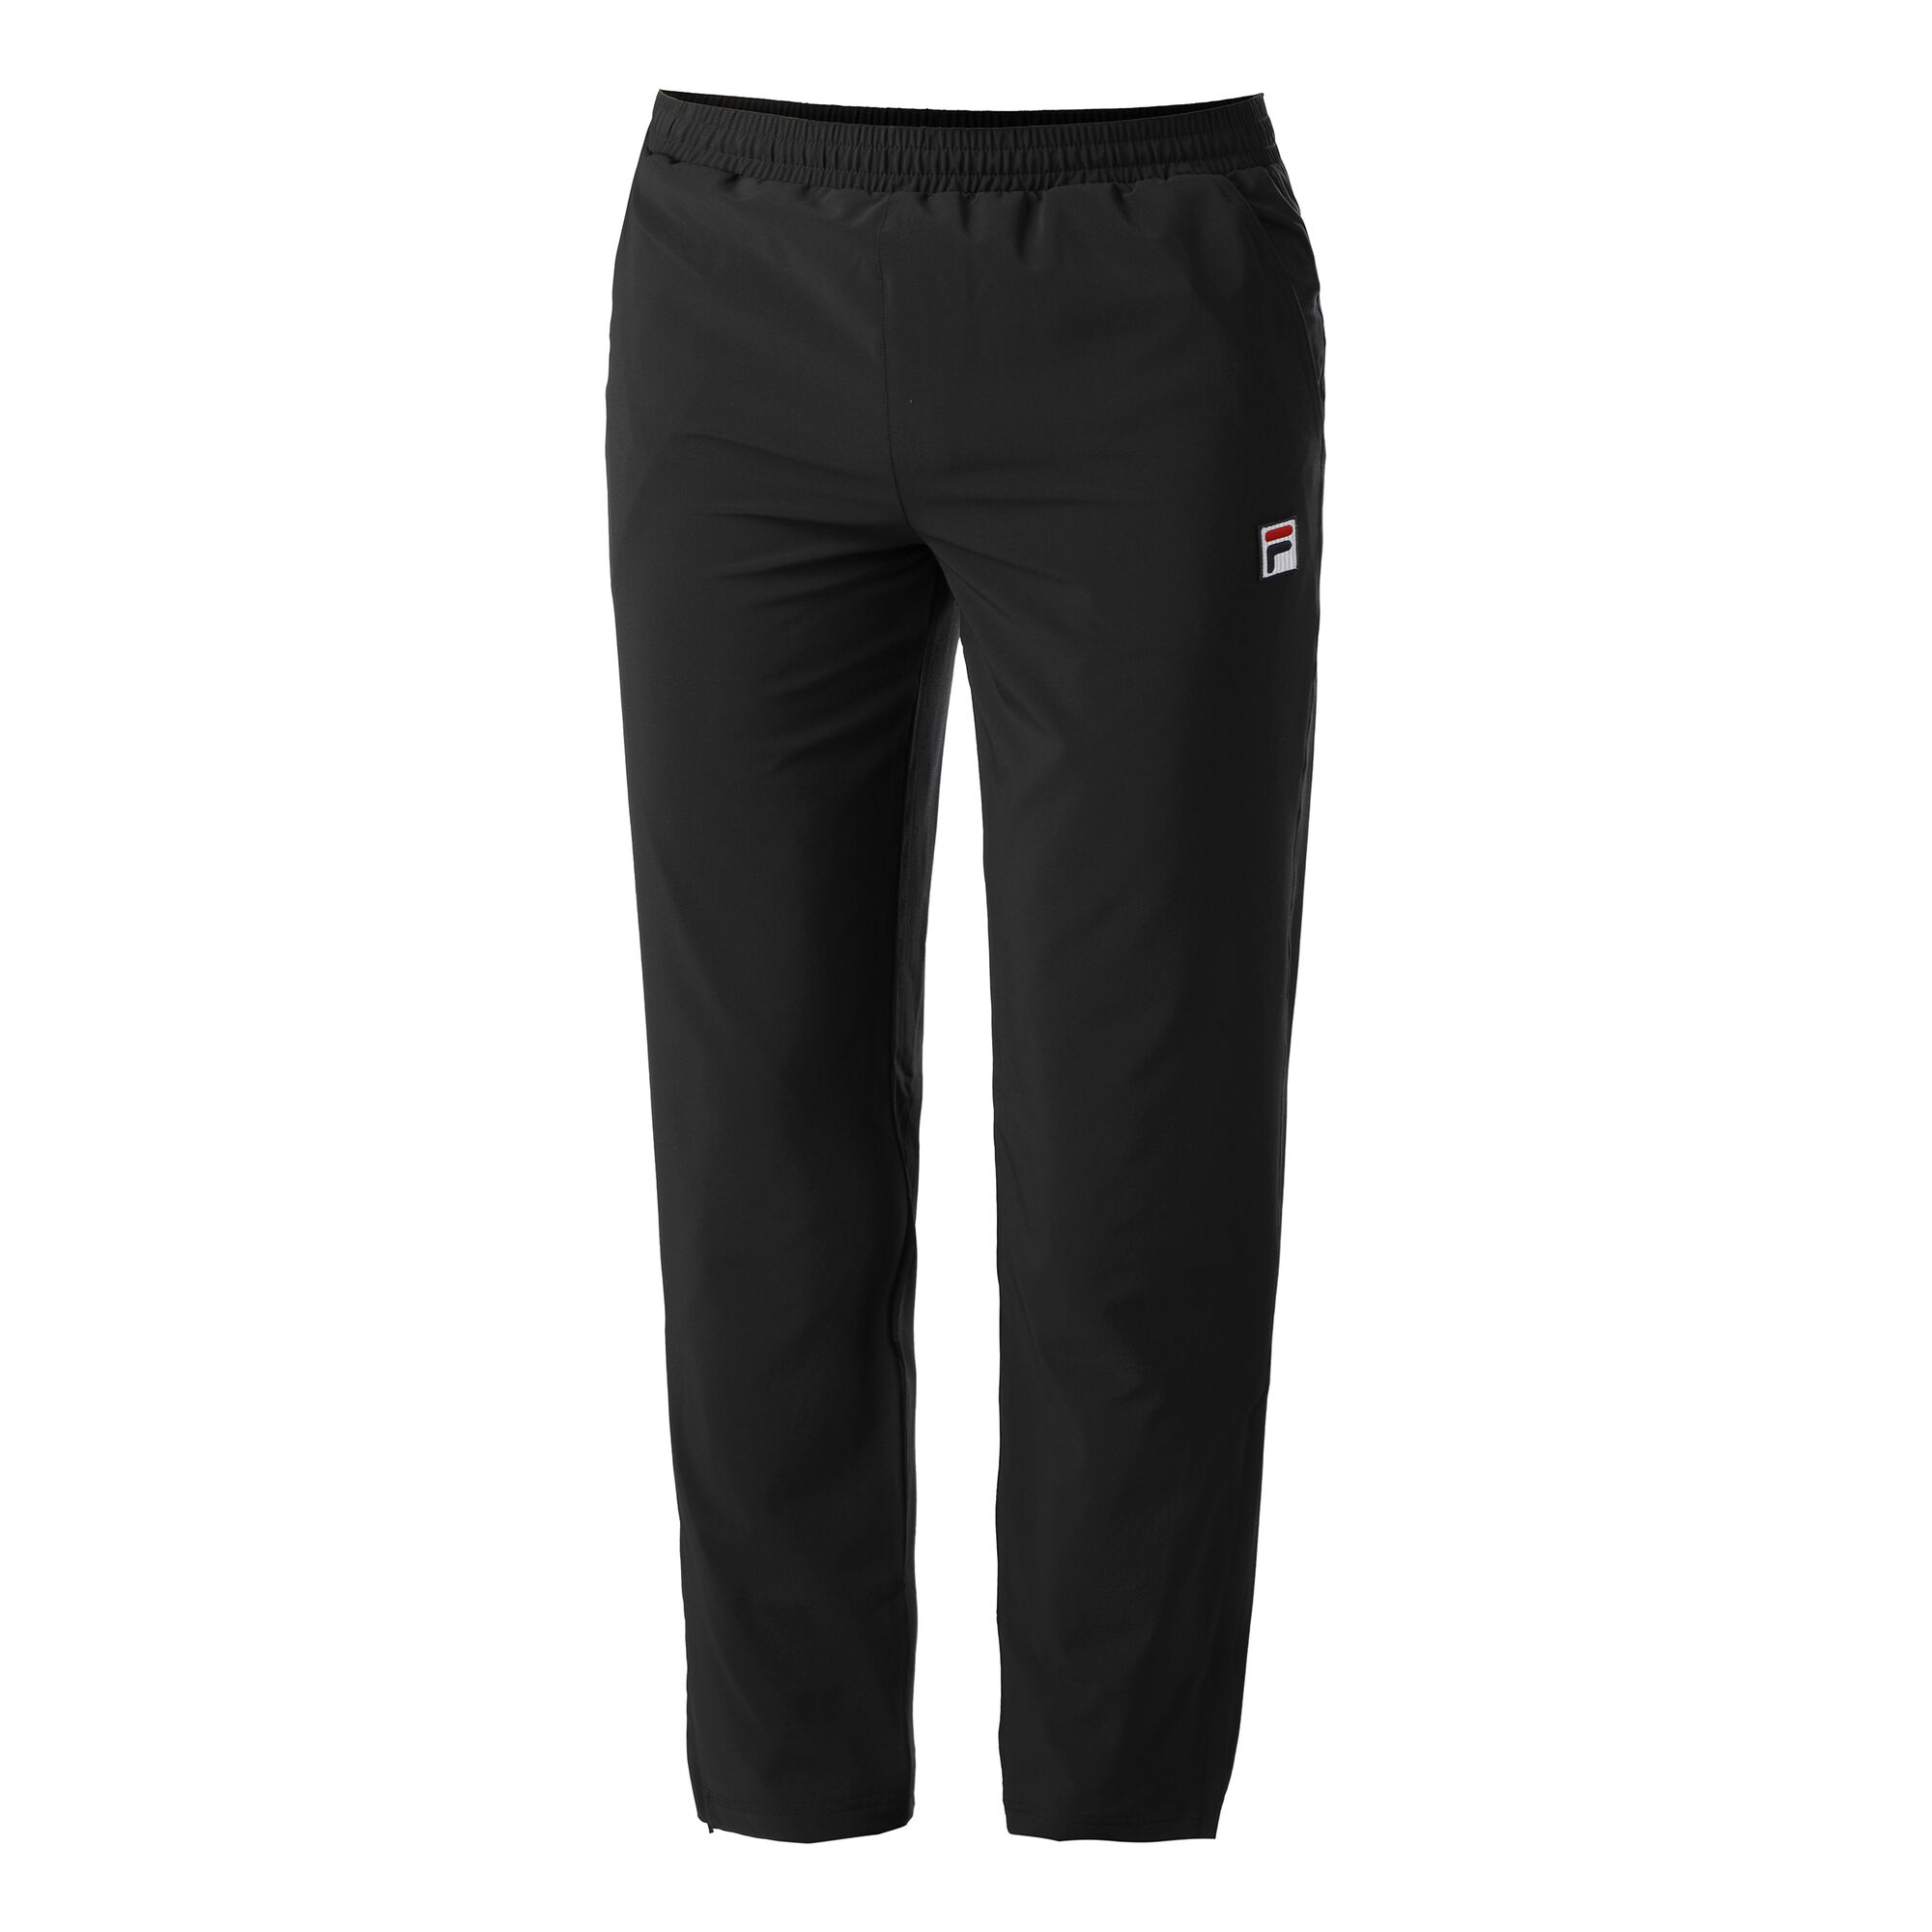 Buy Fila Pro 3 Training Pants Men Black, Dark Grey online